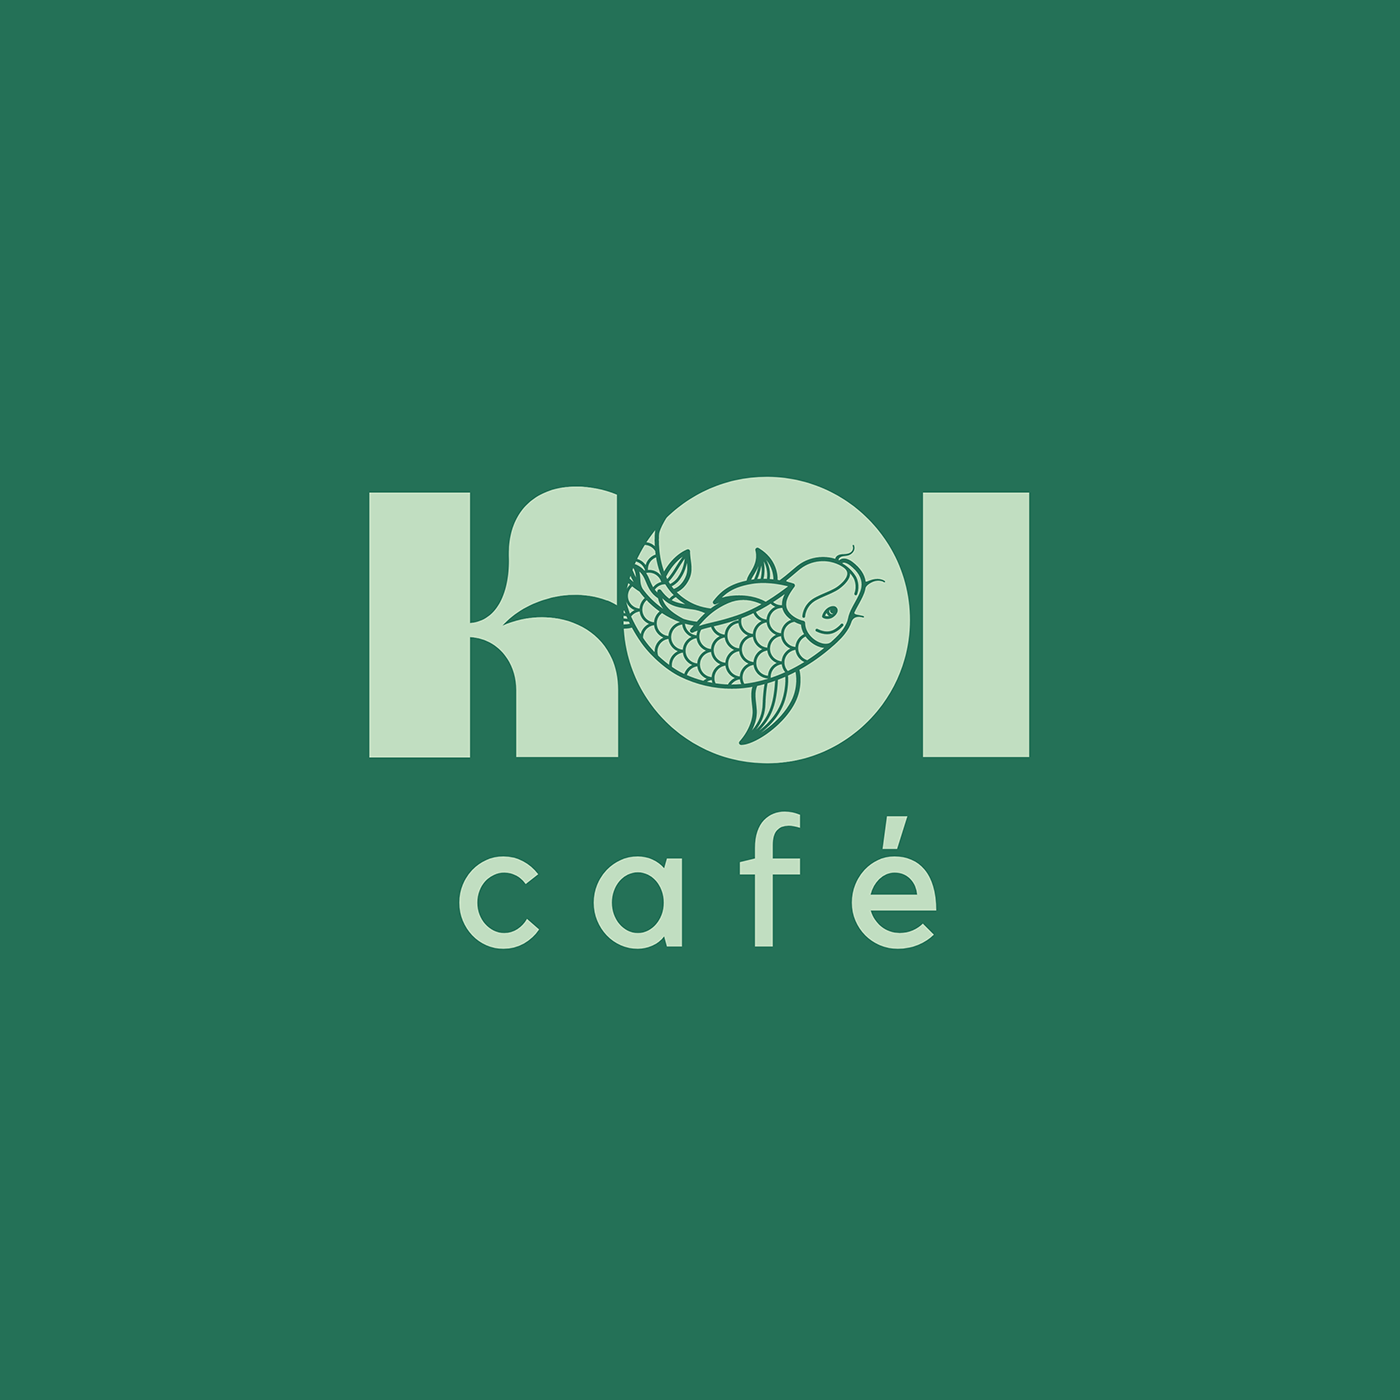 cafe design fish inspired japanese koi logo noodles Packaging tea